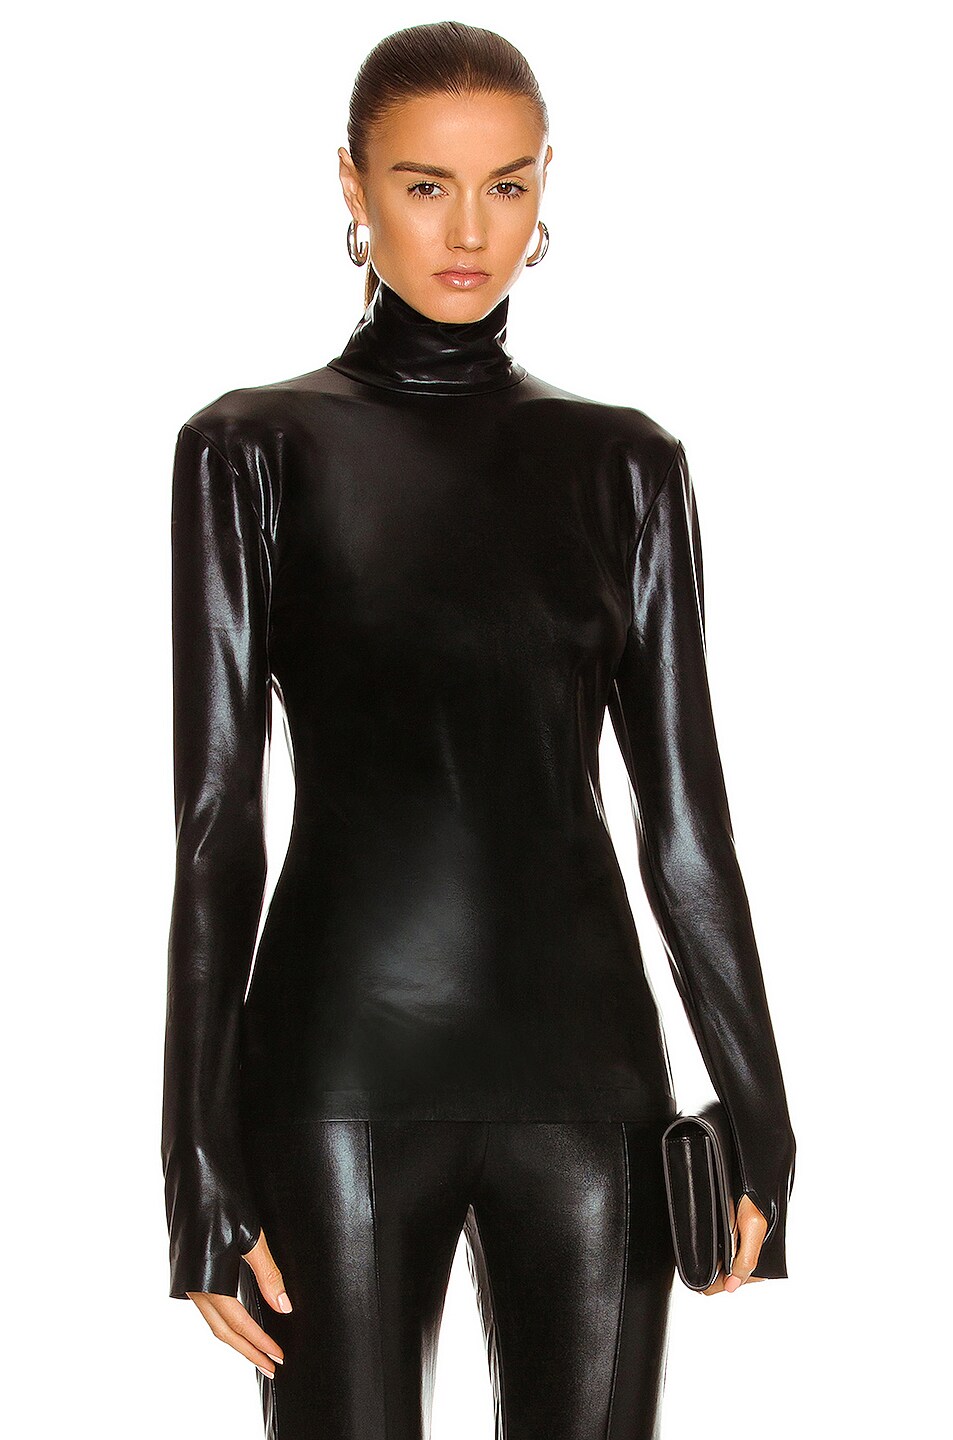 Norma Kamali Slim Fit Long Sleeve Turtleneck Top in Black Foil | FWRD